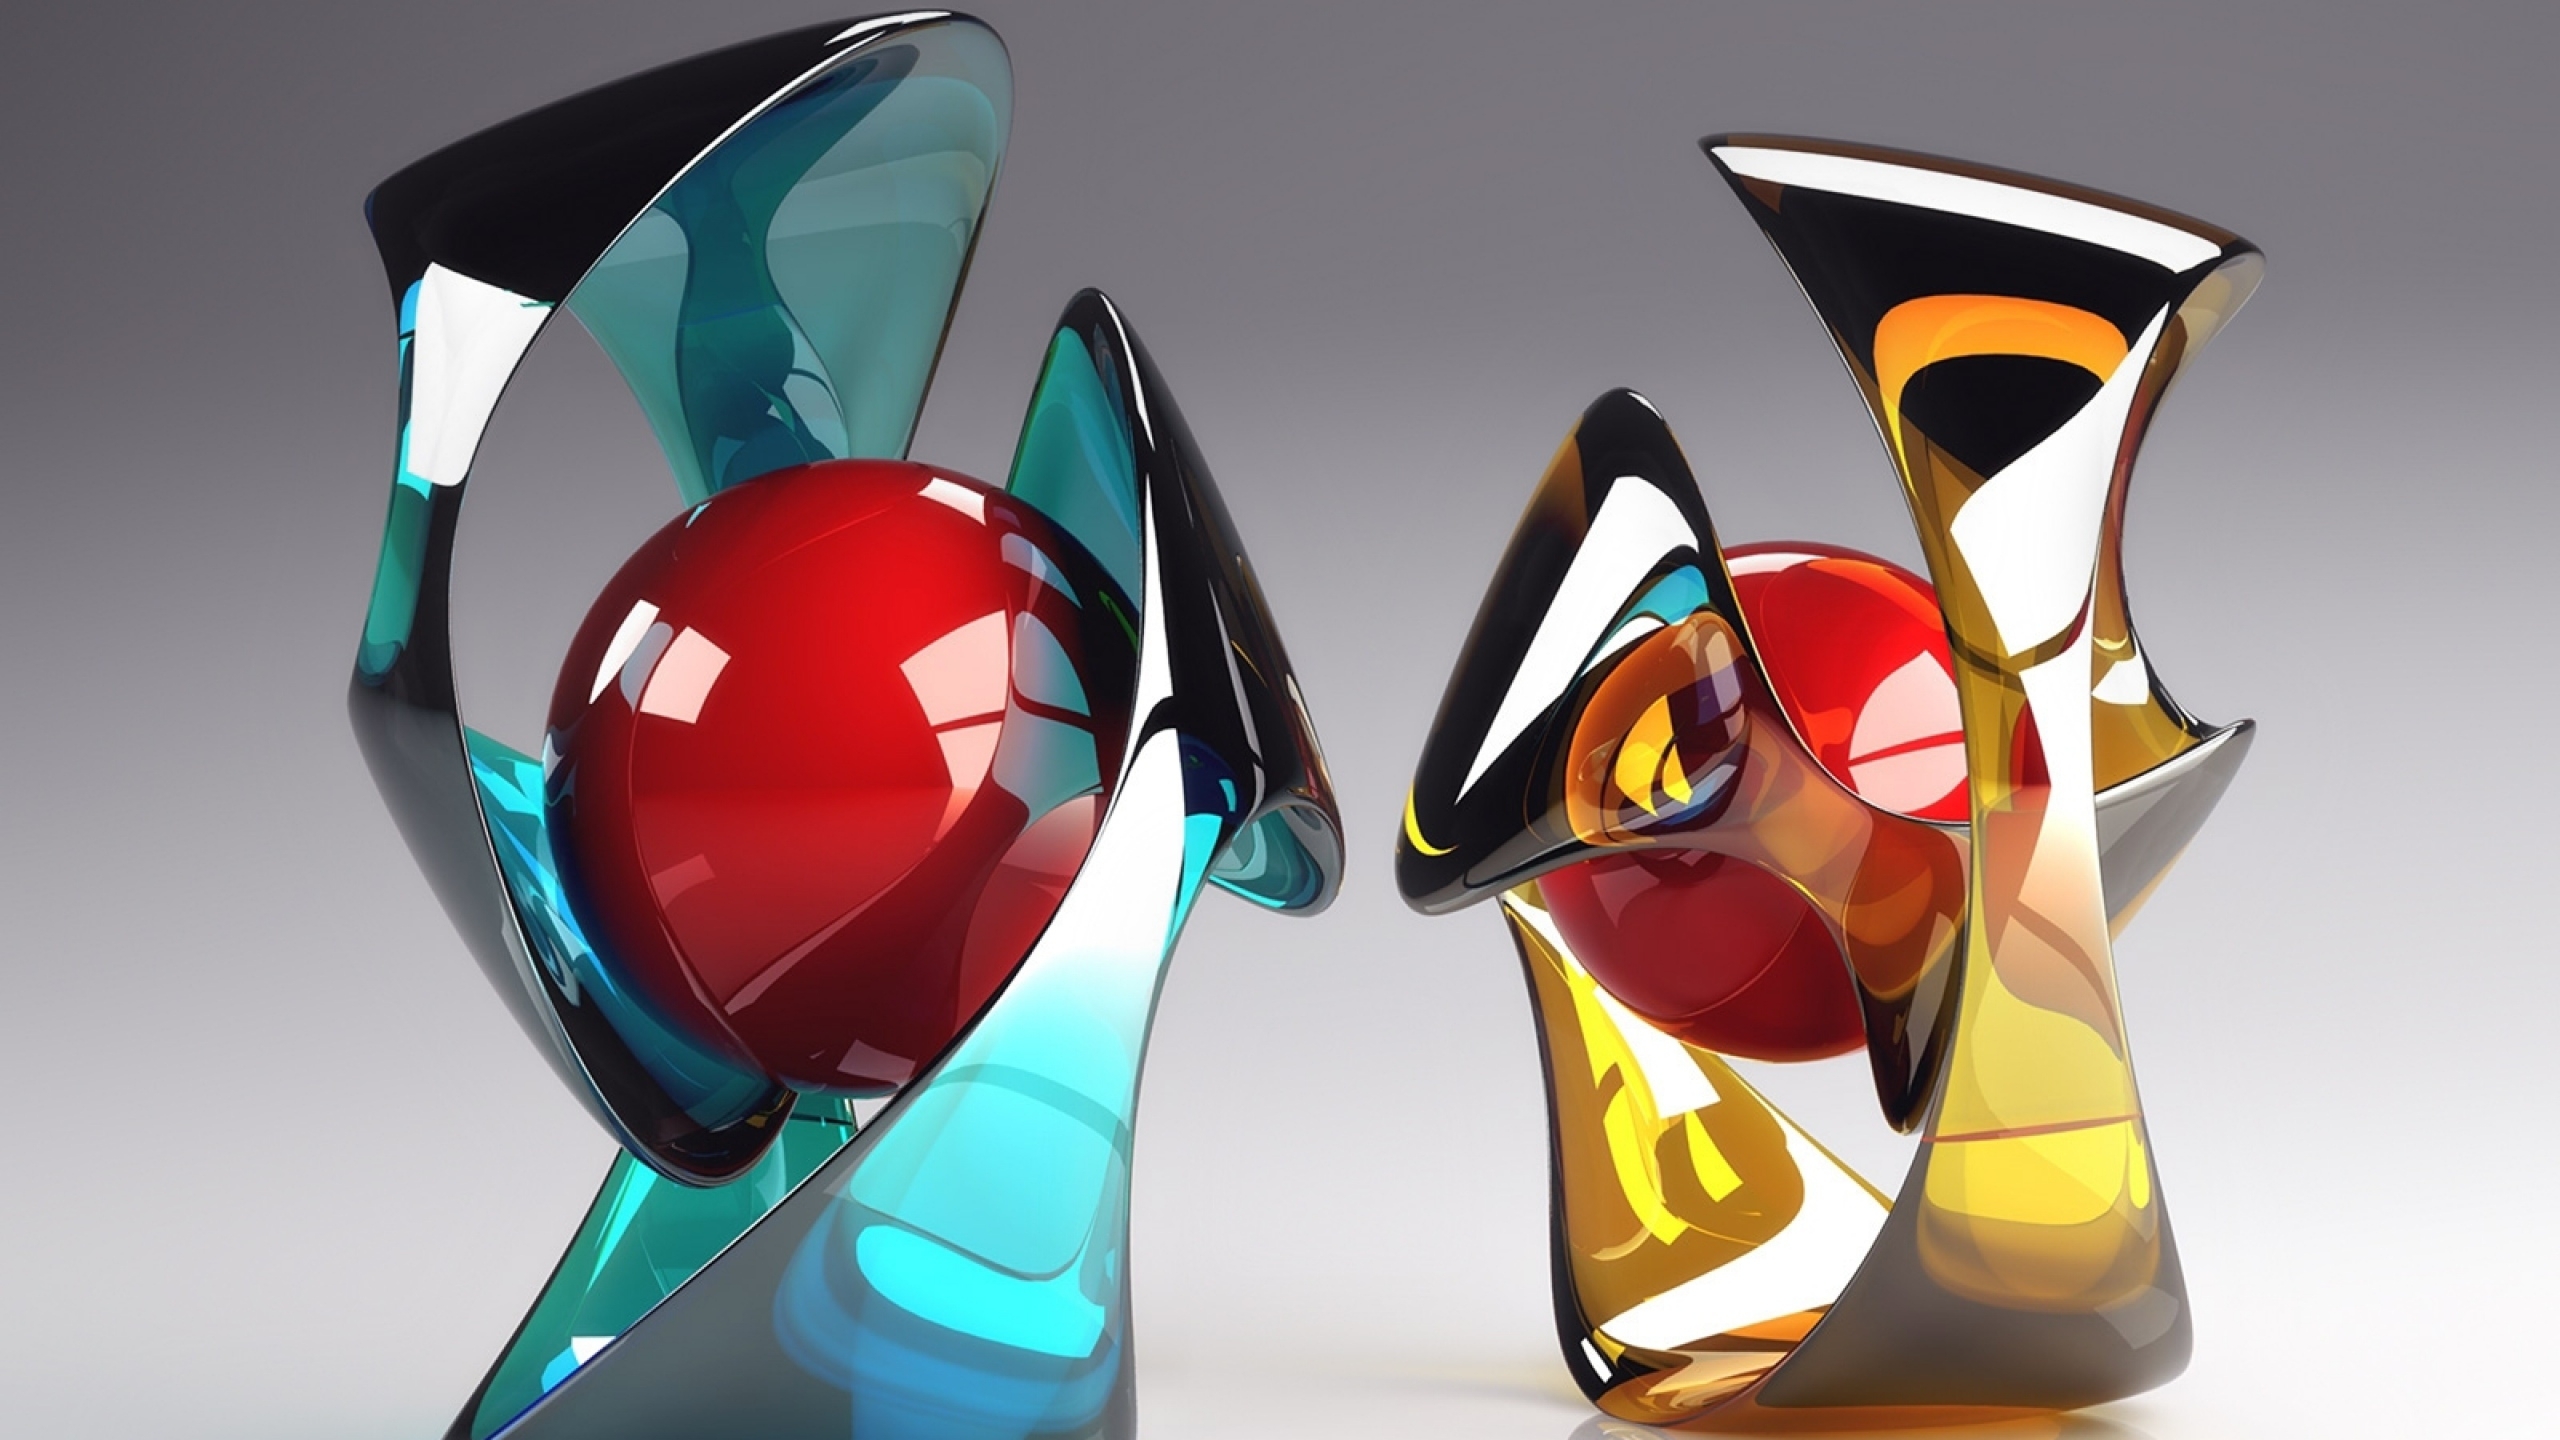 Image: Figures, ball, bending, color, glass